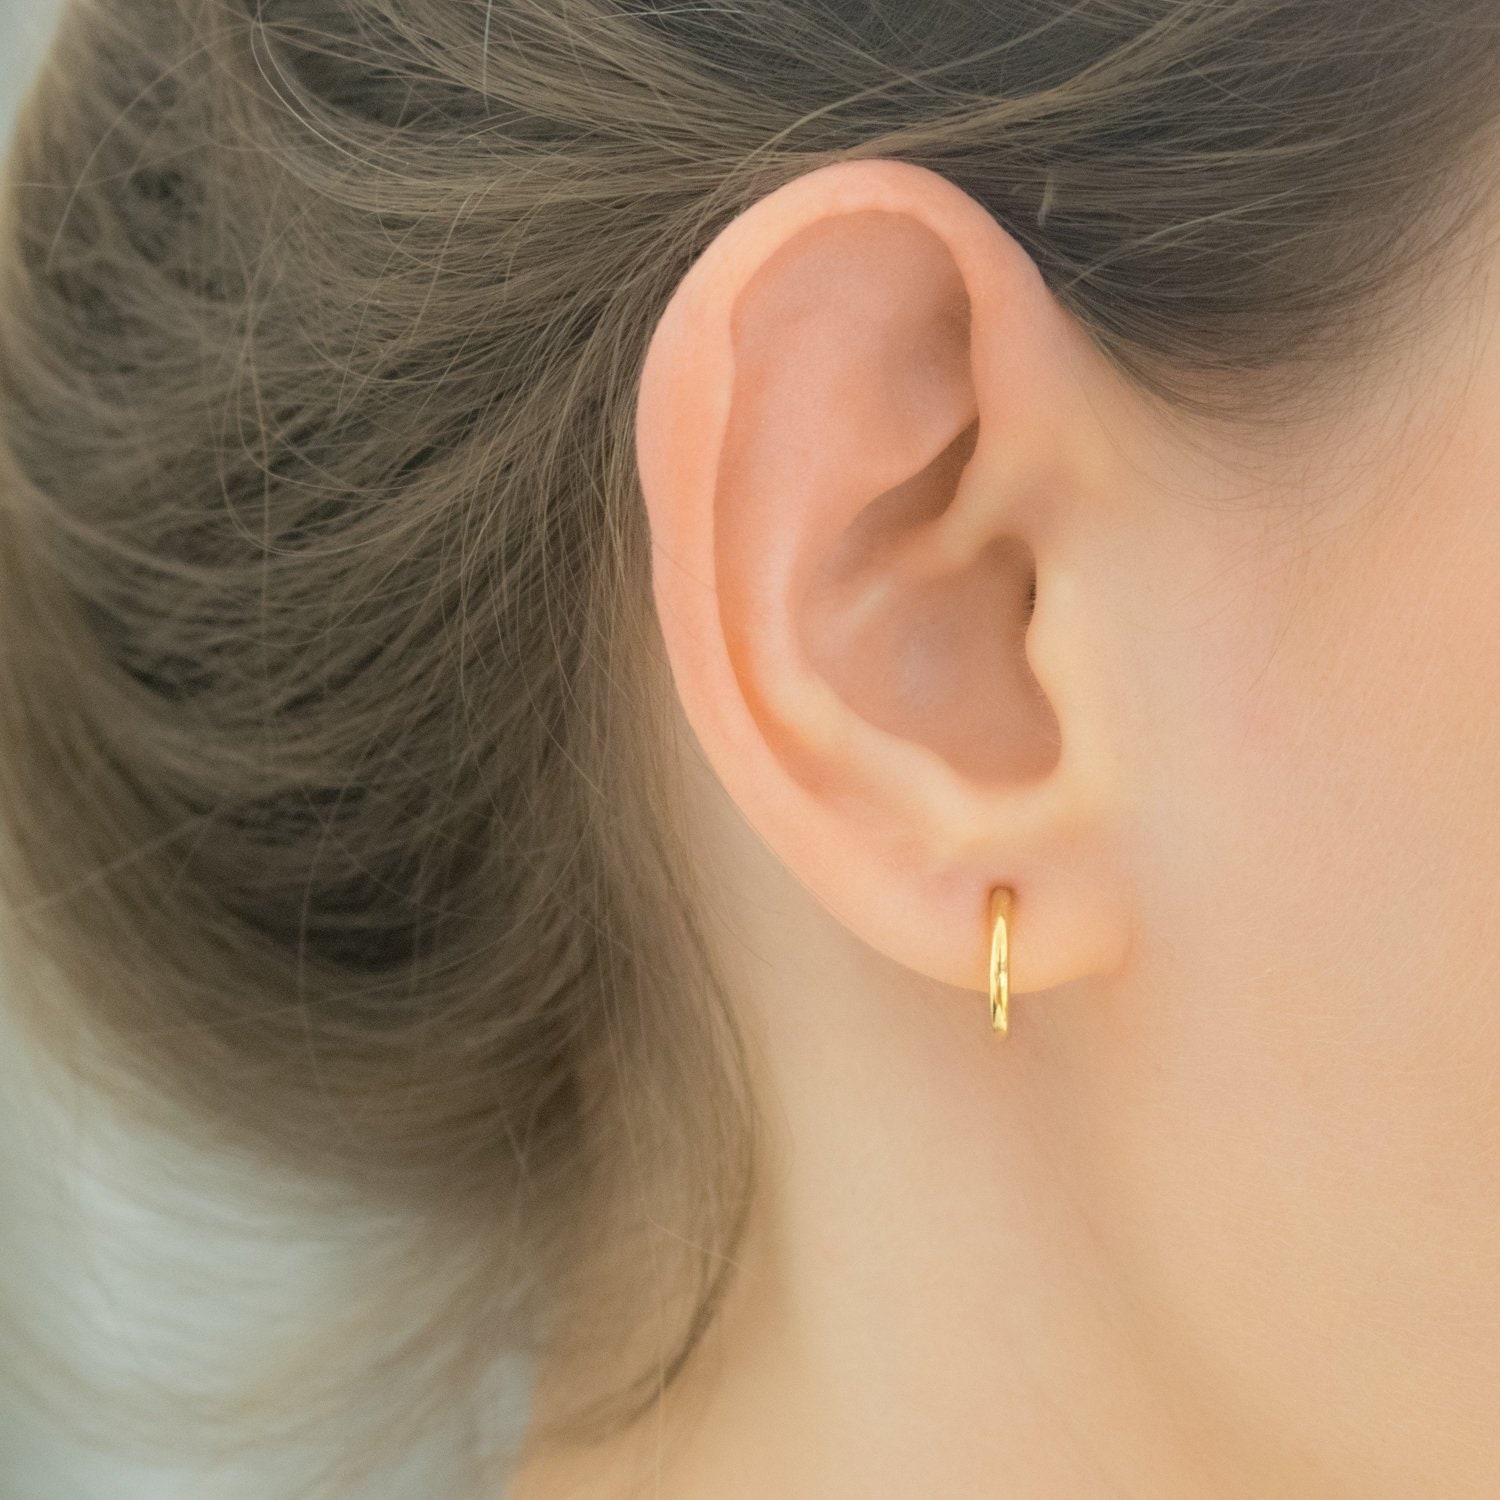 Buy Shocking Gold Statement Earrings Online in India | Zariin